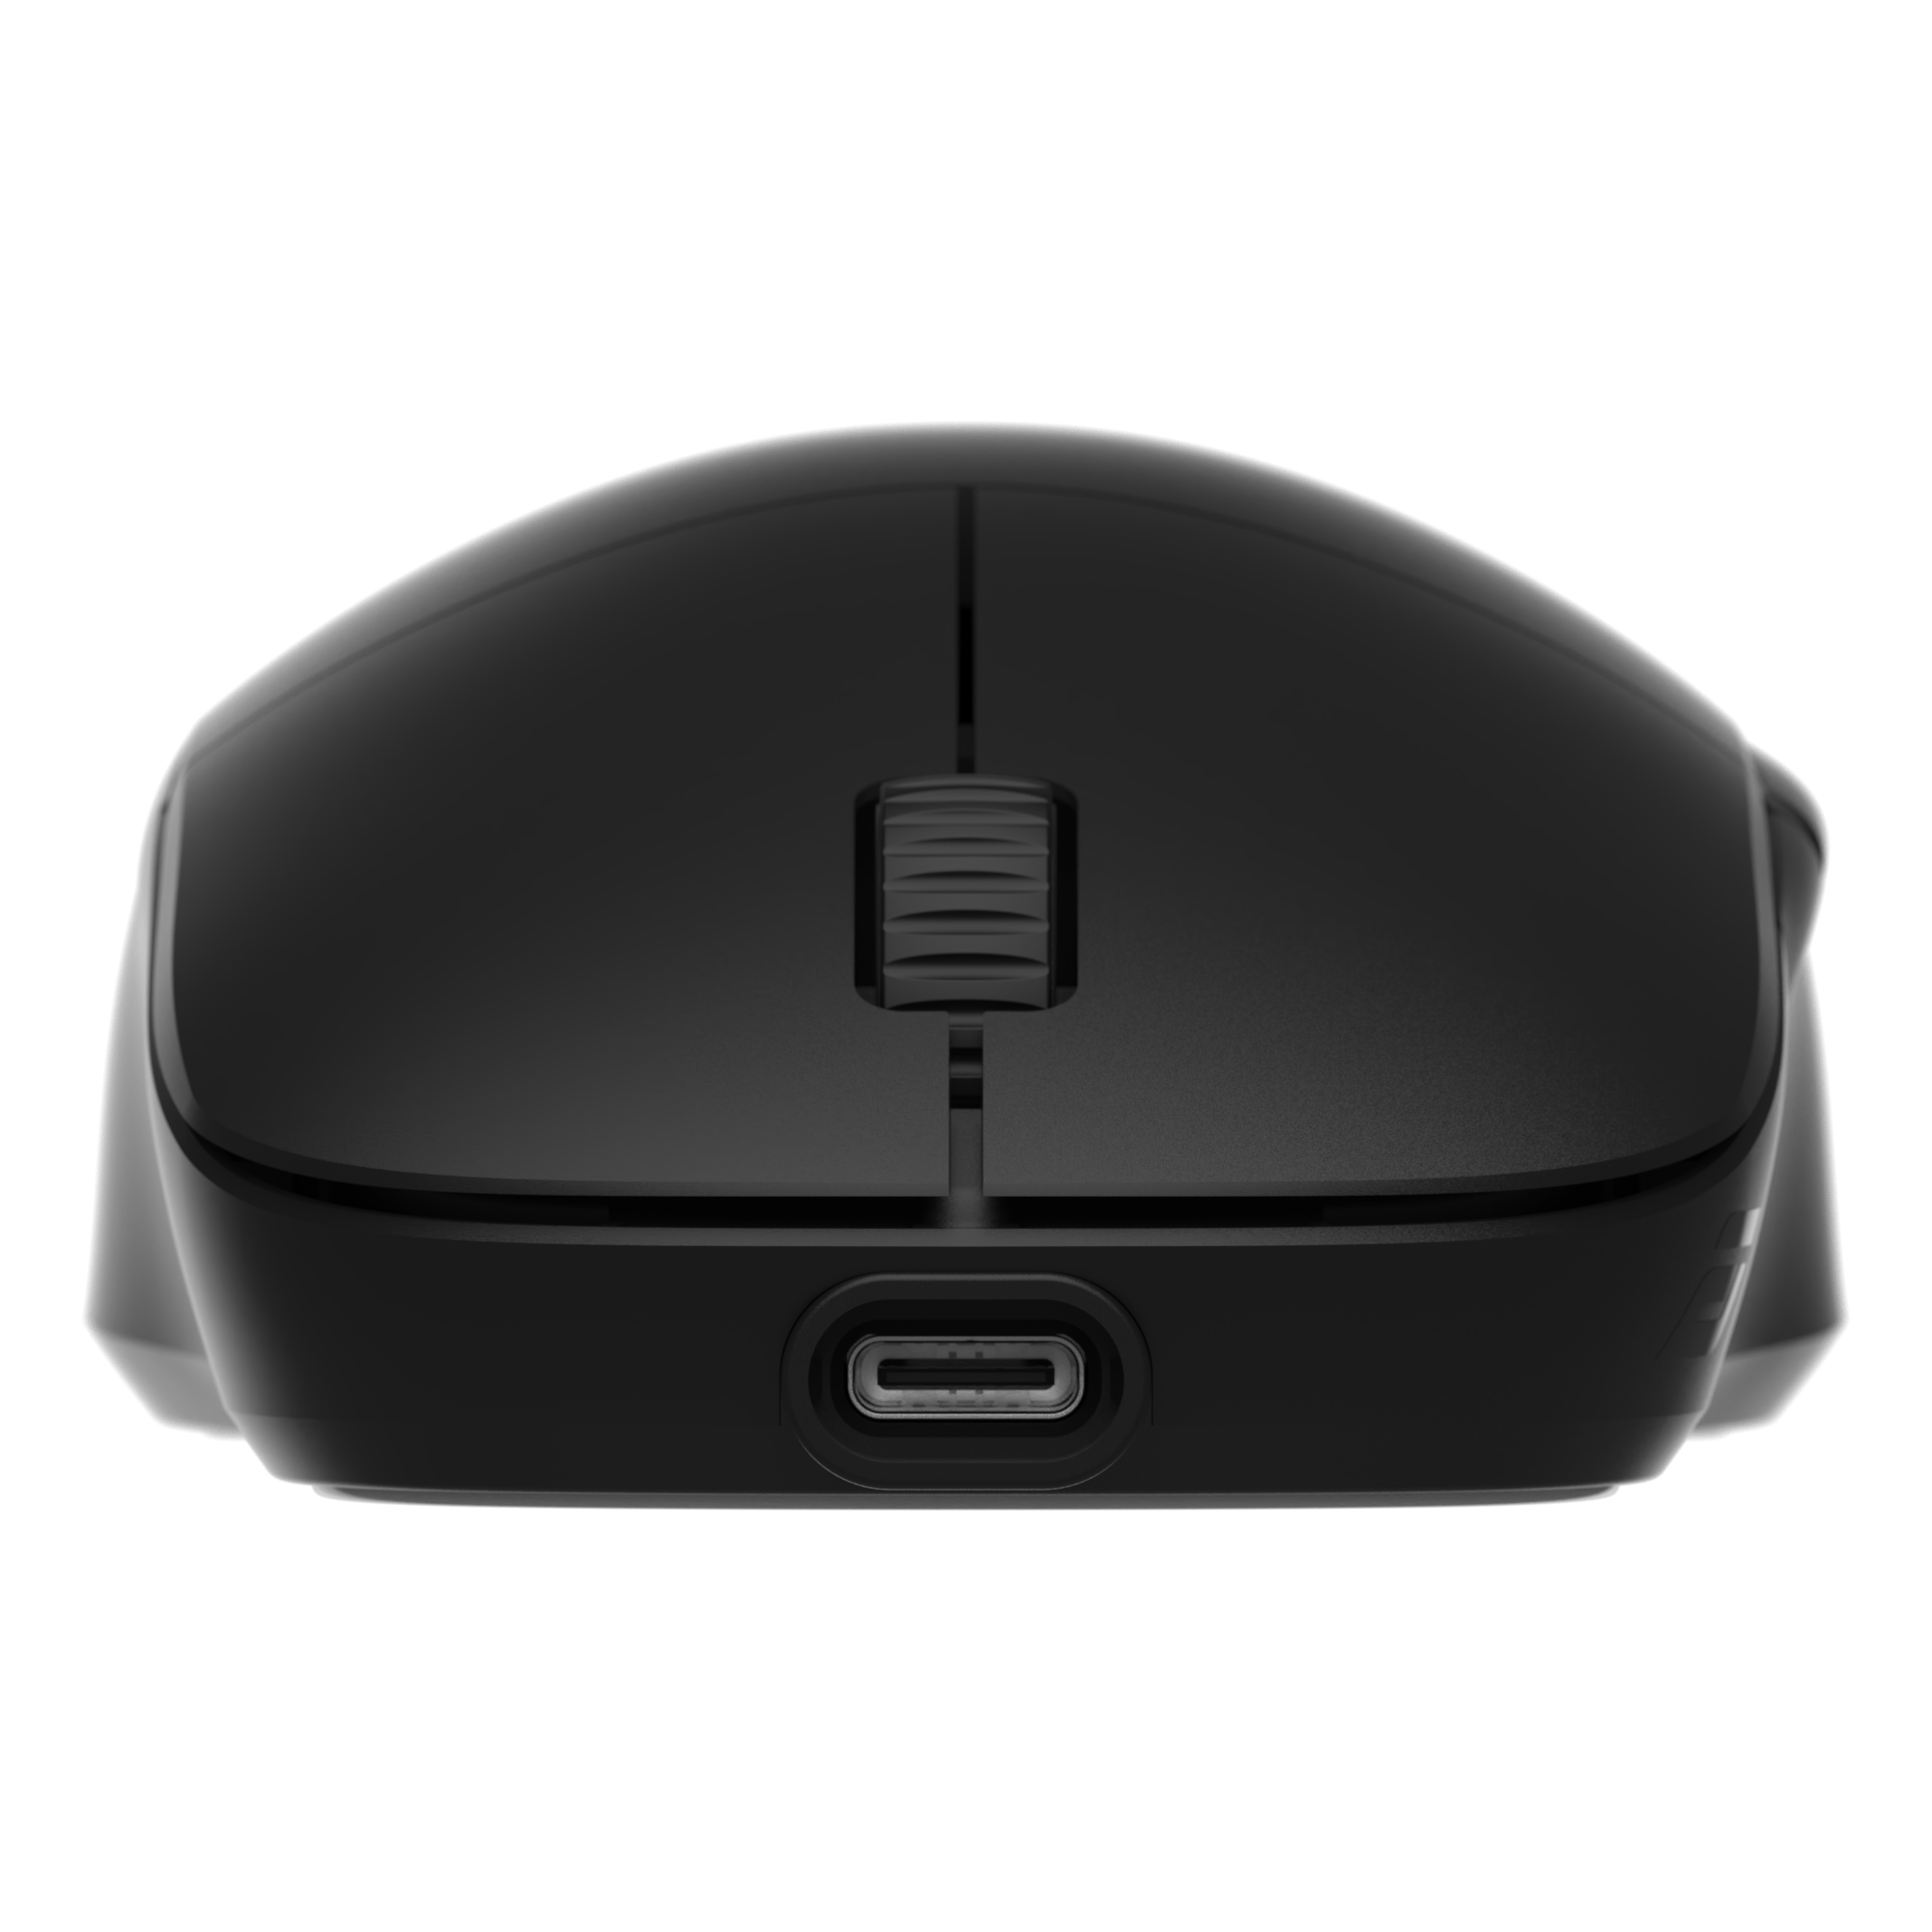 Endgamegear - XM2w Wireless Gaming Mouse - Black